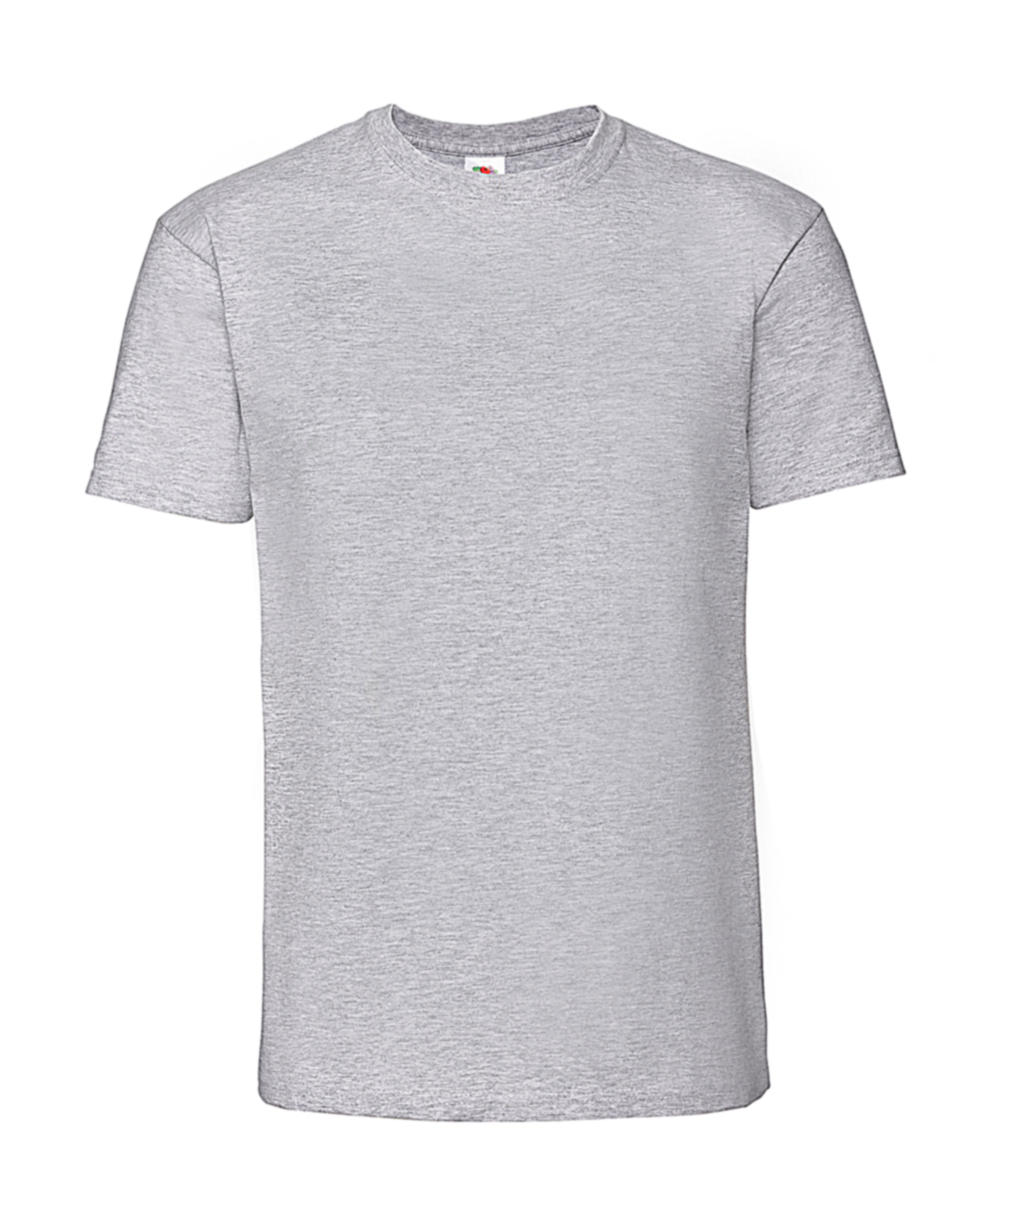 Tričko z prstencovej bavlny Iconic 195 Premium - heather grey